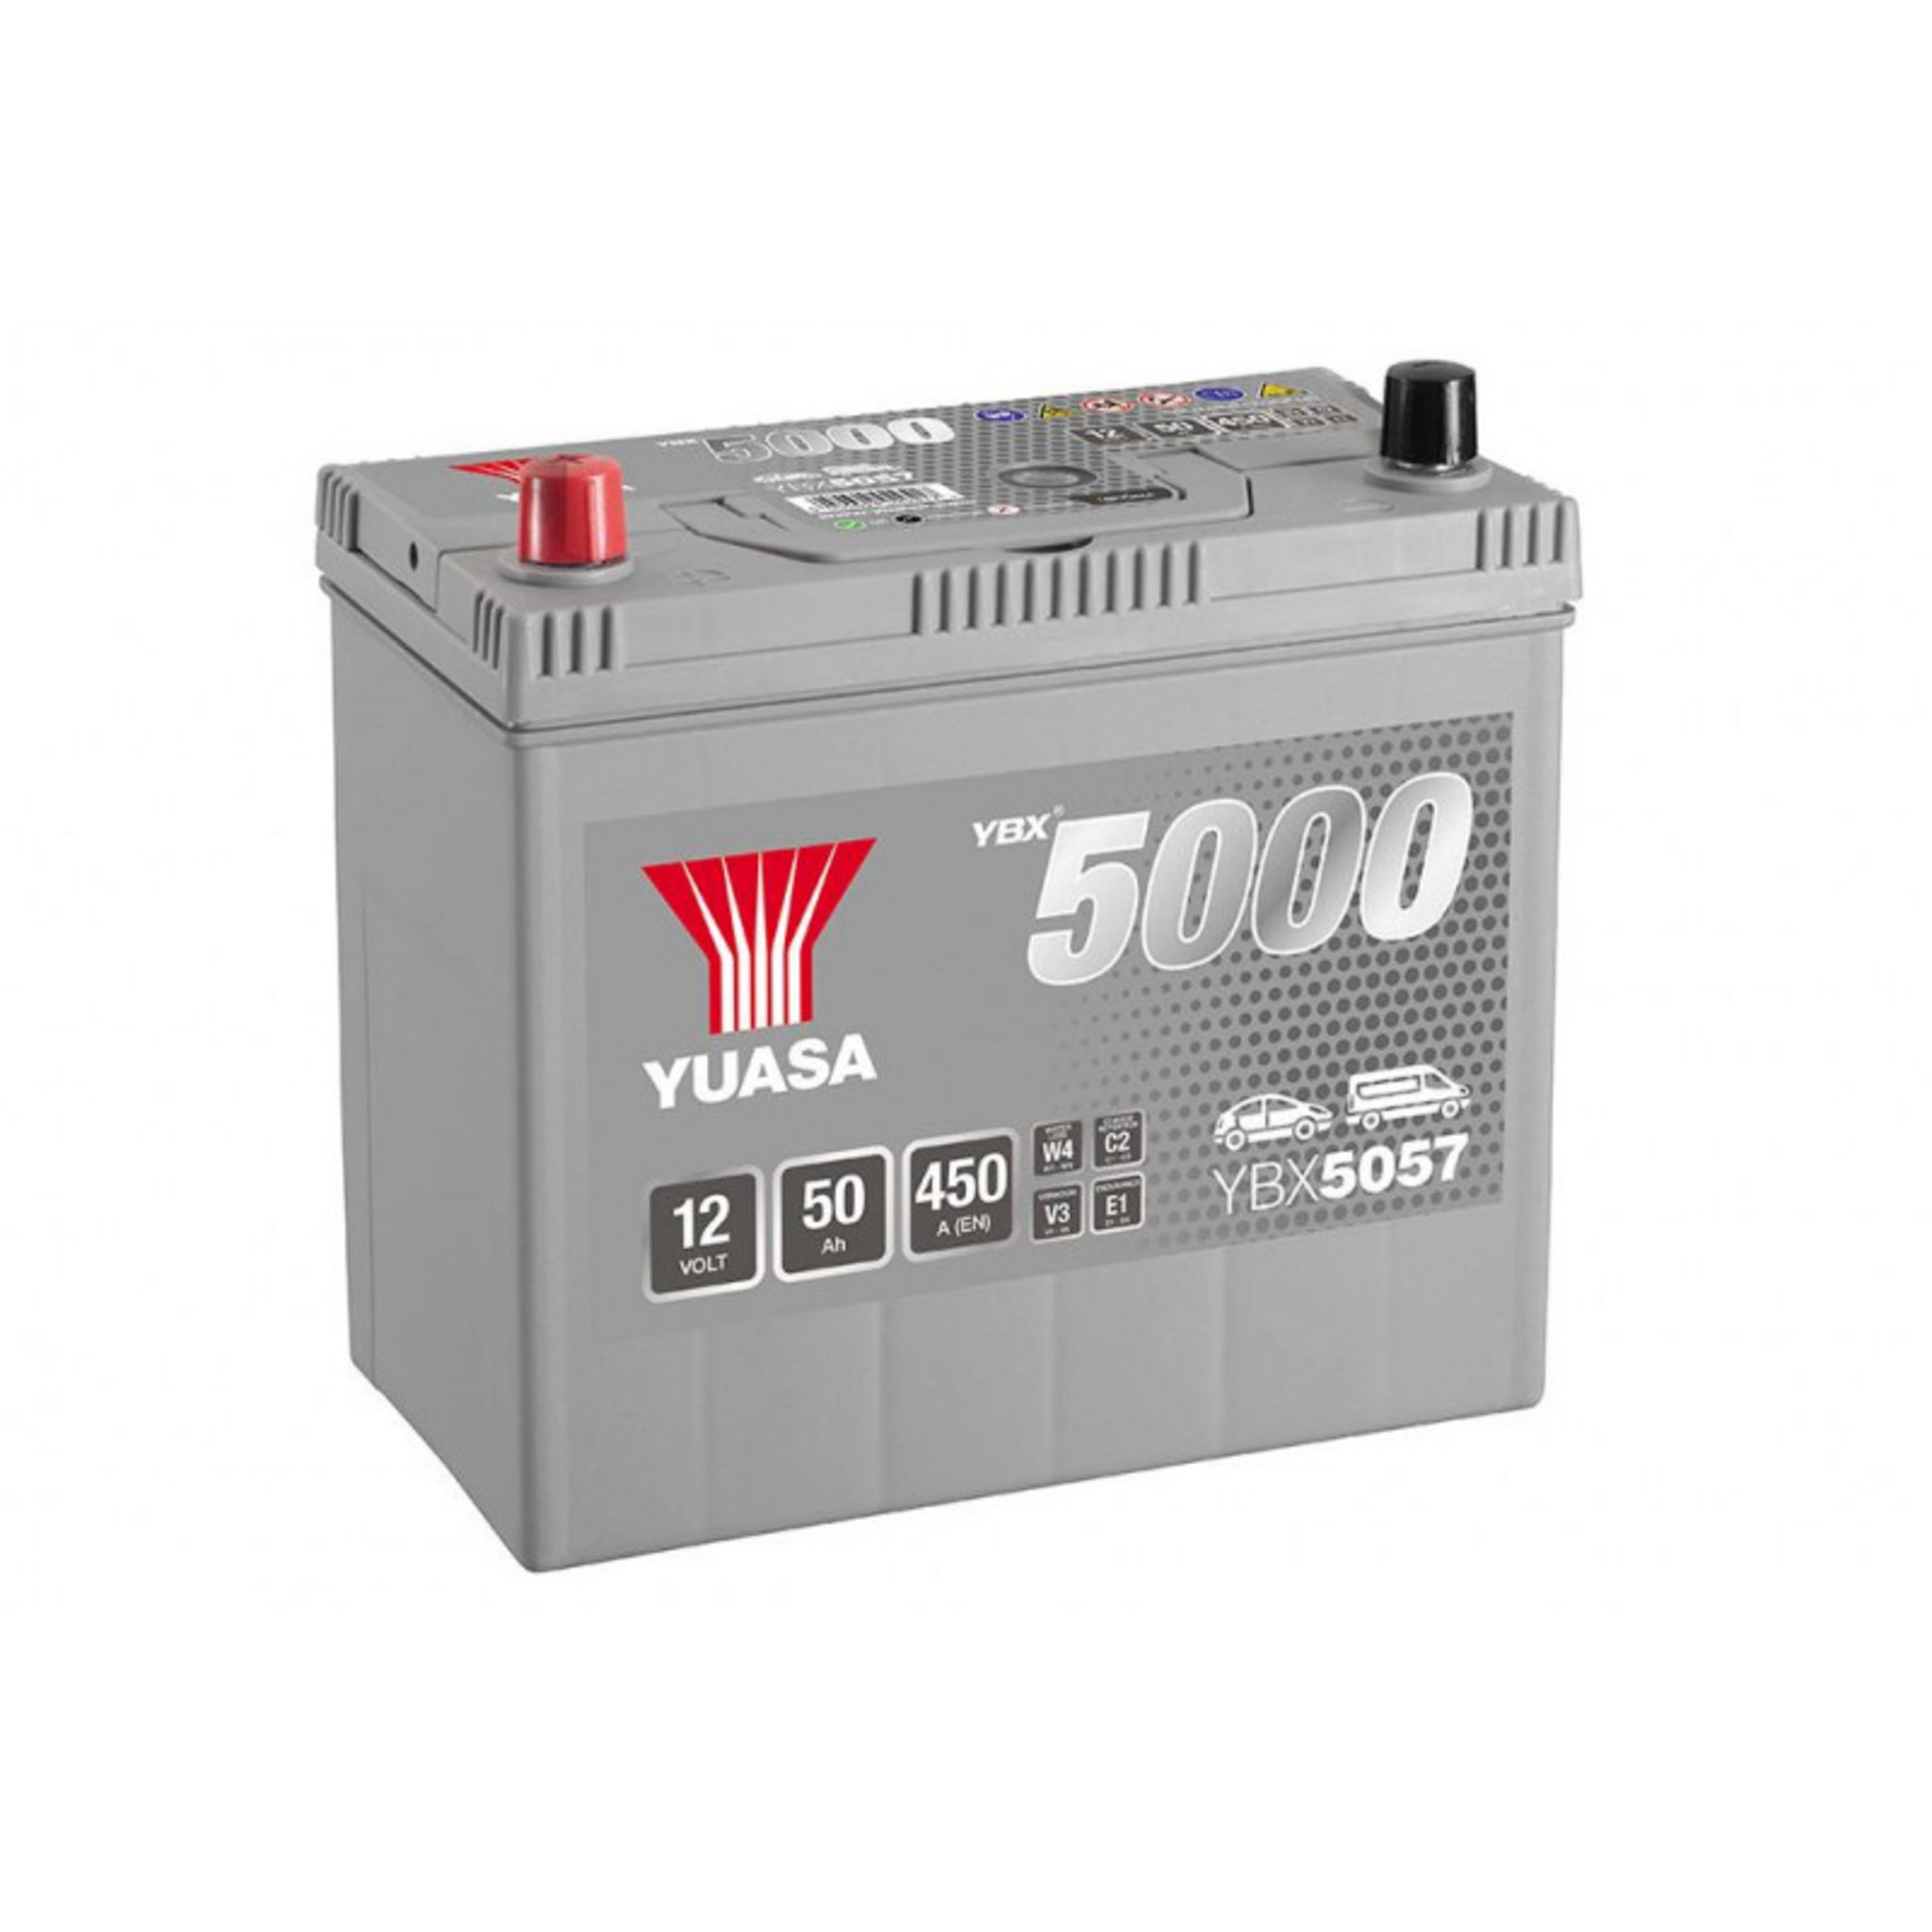 YUASA Batterie Yuasa Silver YBX5057 12v 50ah 450A Hautes